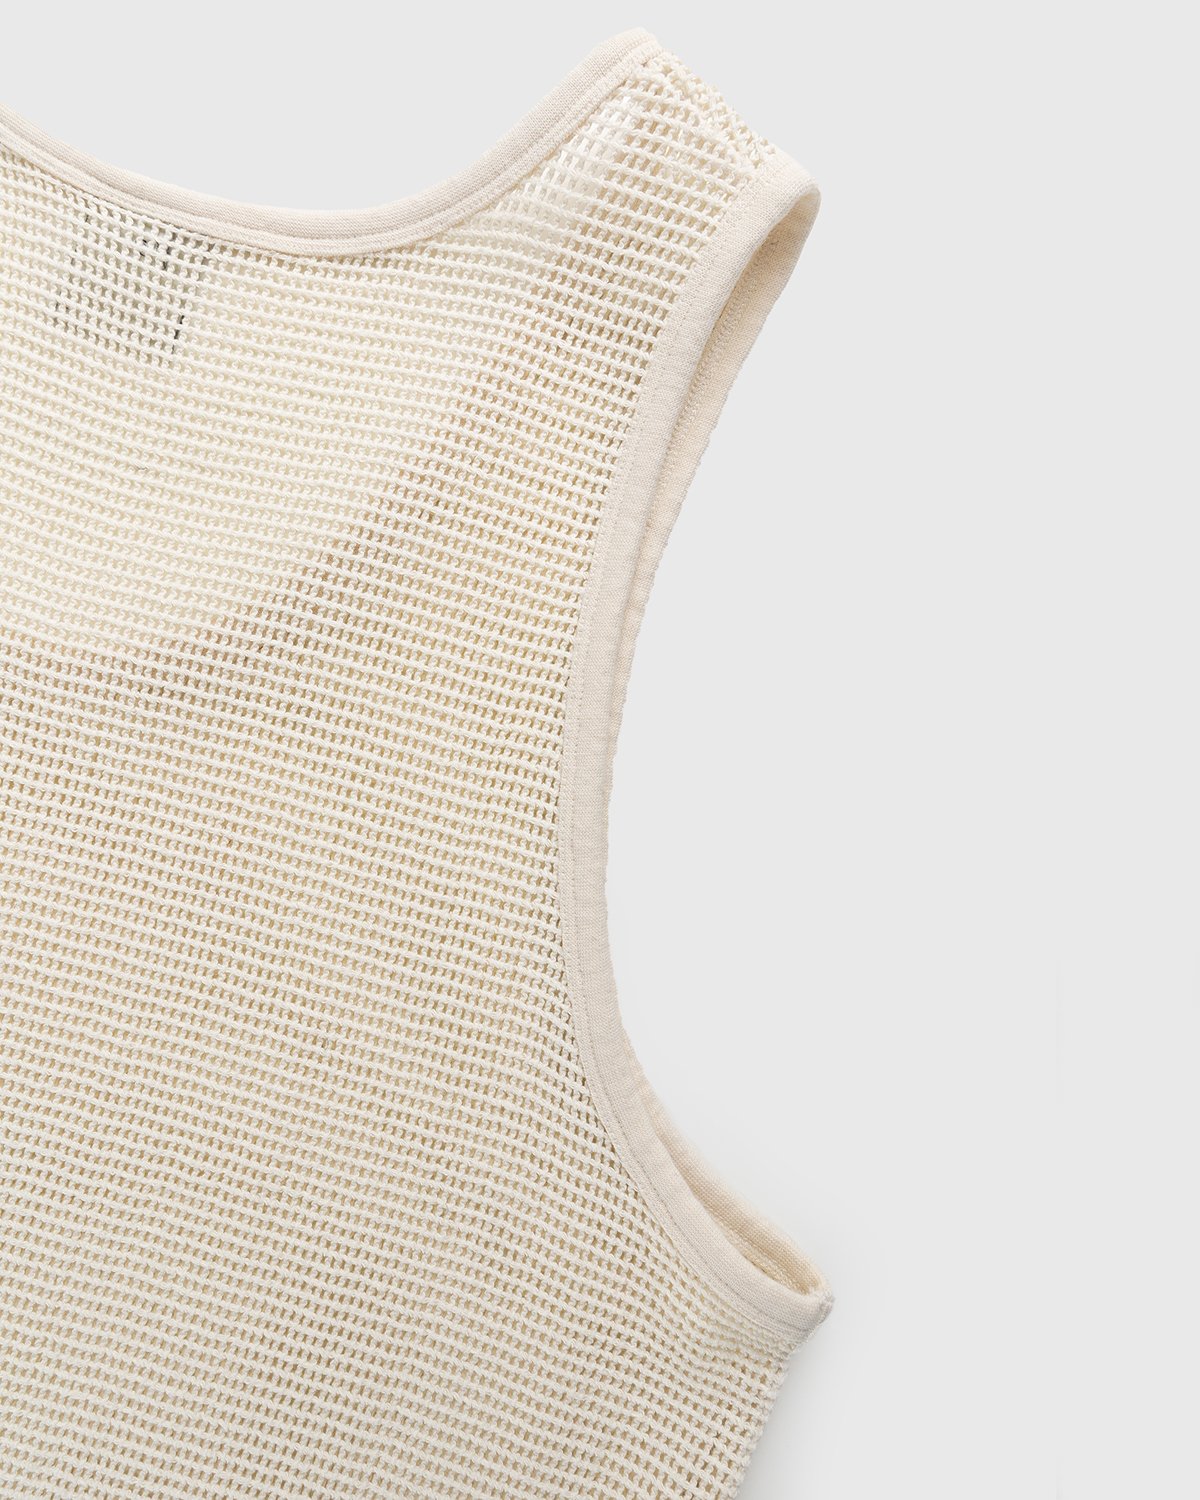 Highsnobiety - Knit Mesh Tank Top White - Clothing - Beige - Image 4